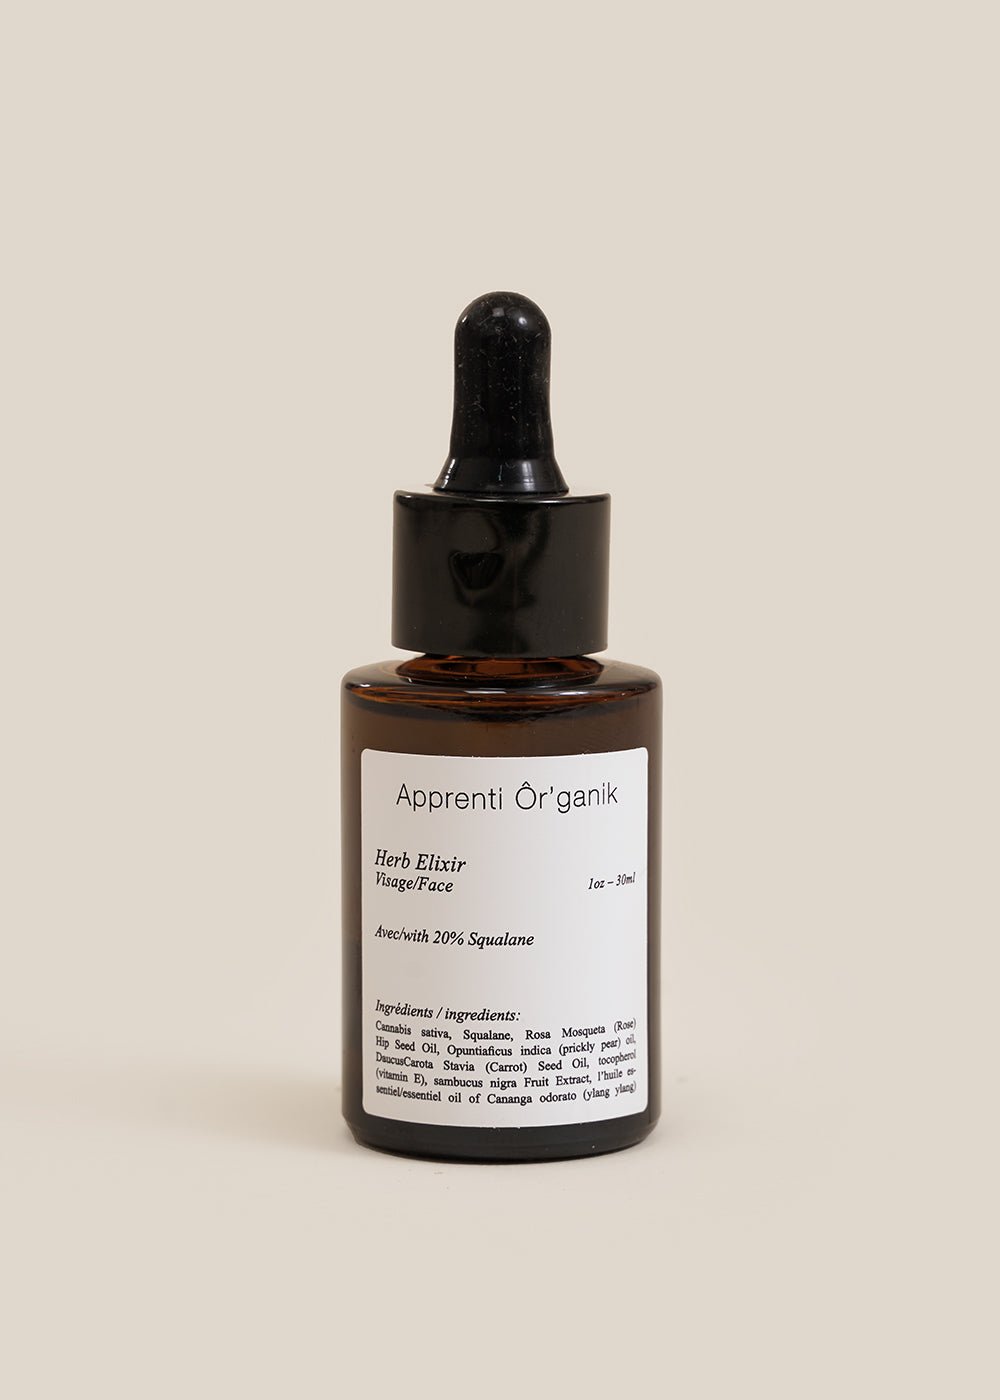 Apprenti Organik Facial Oil Elixir - New Classics Studios Sustainable Ethical Fashion Canada